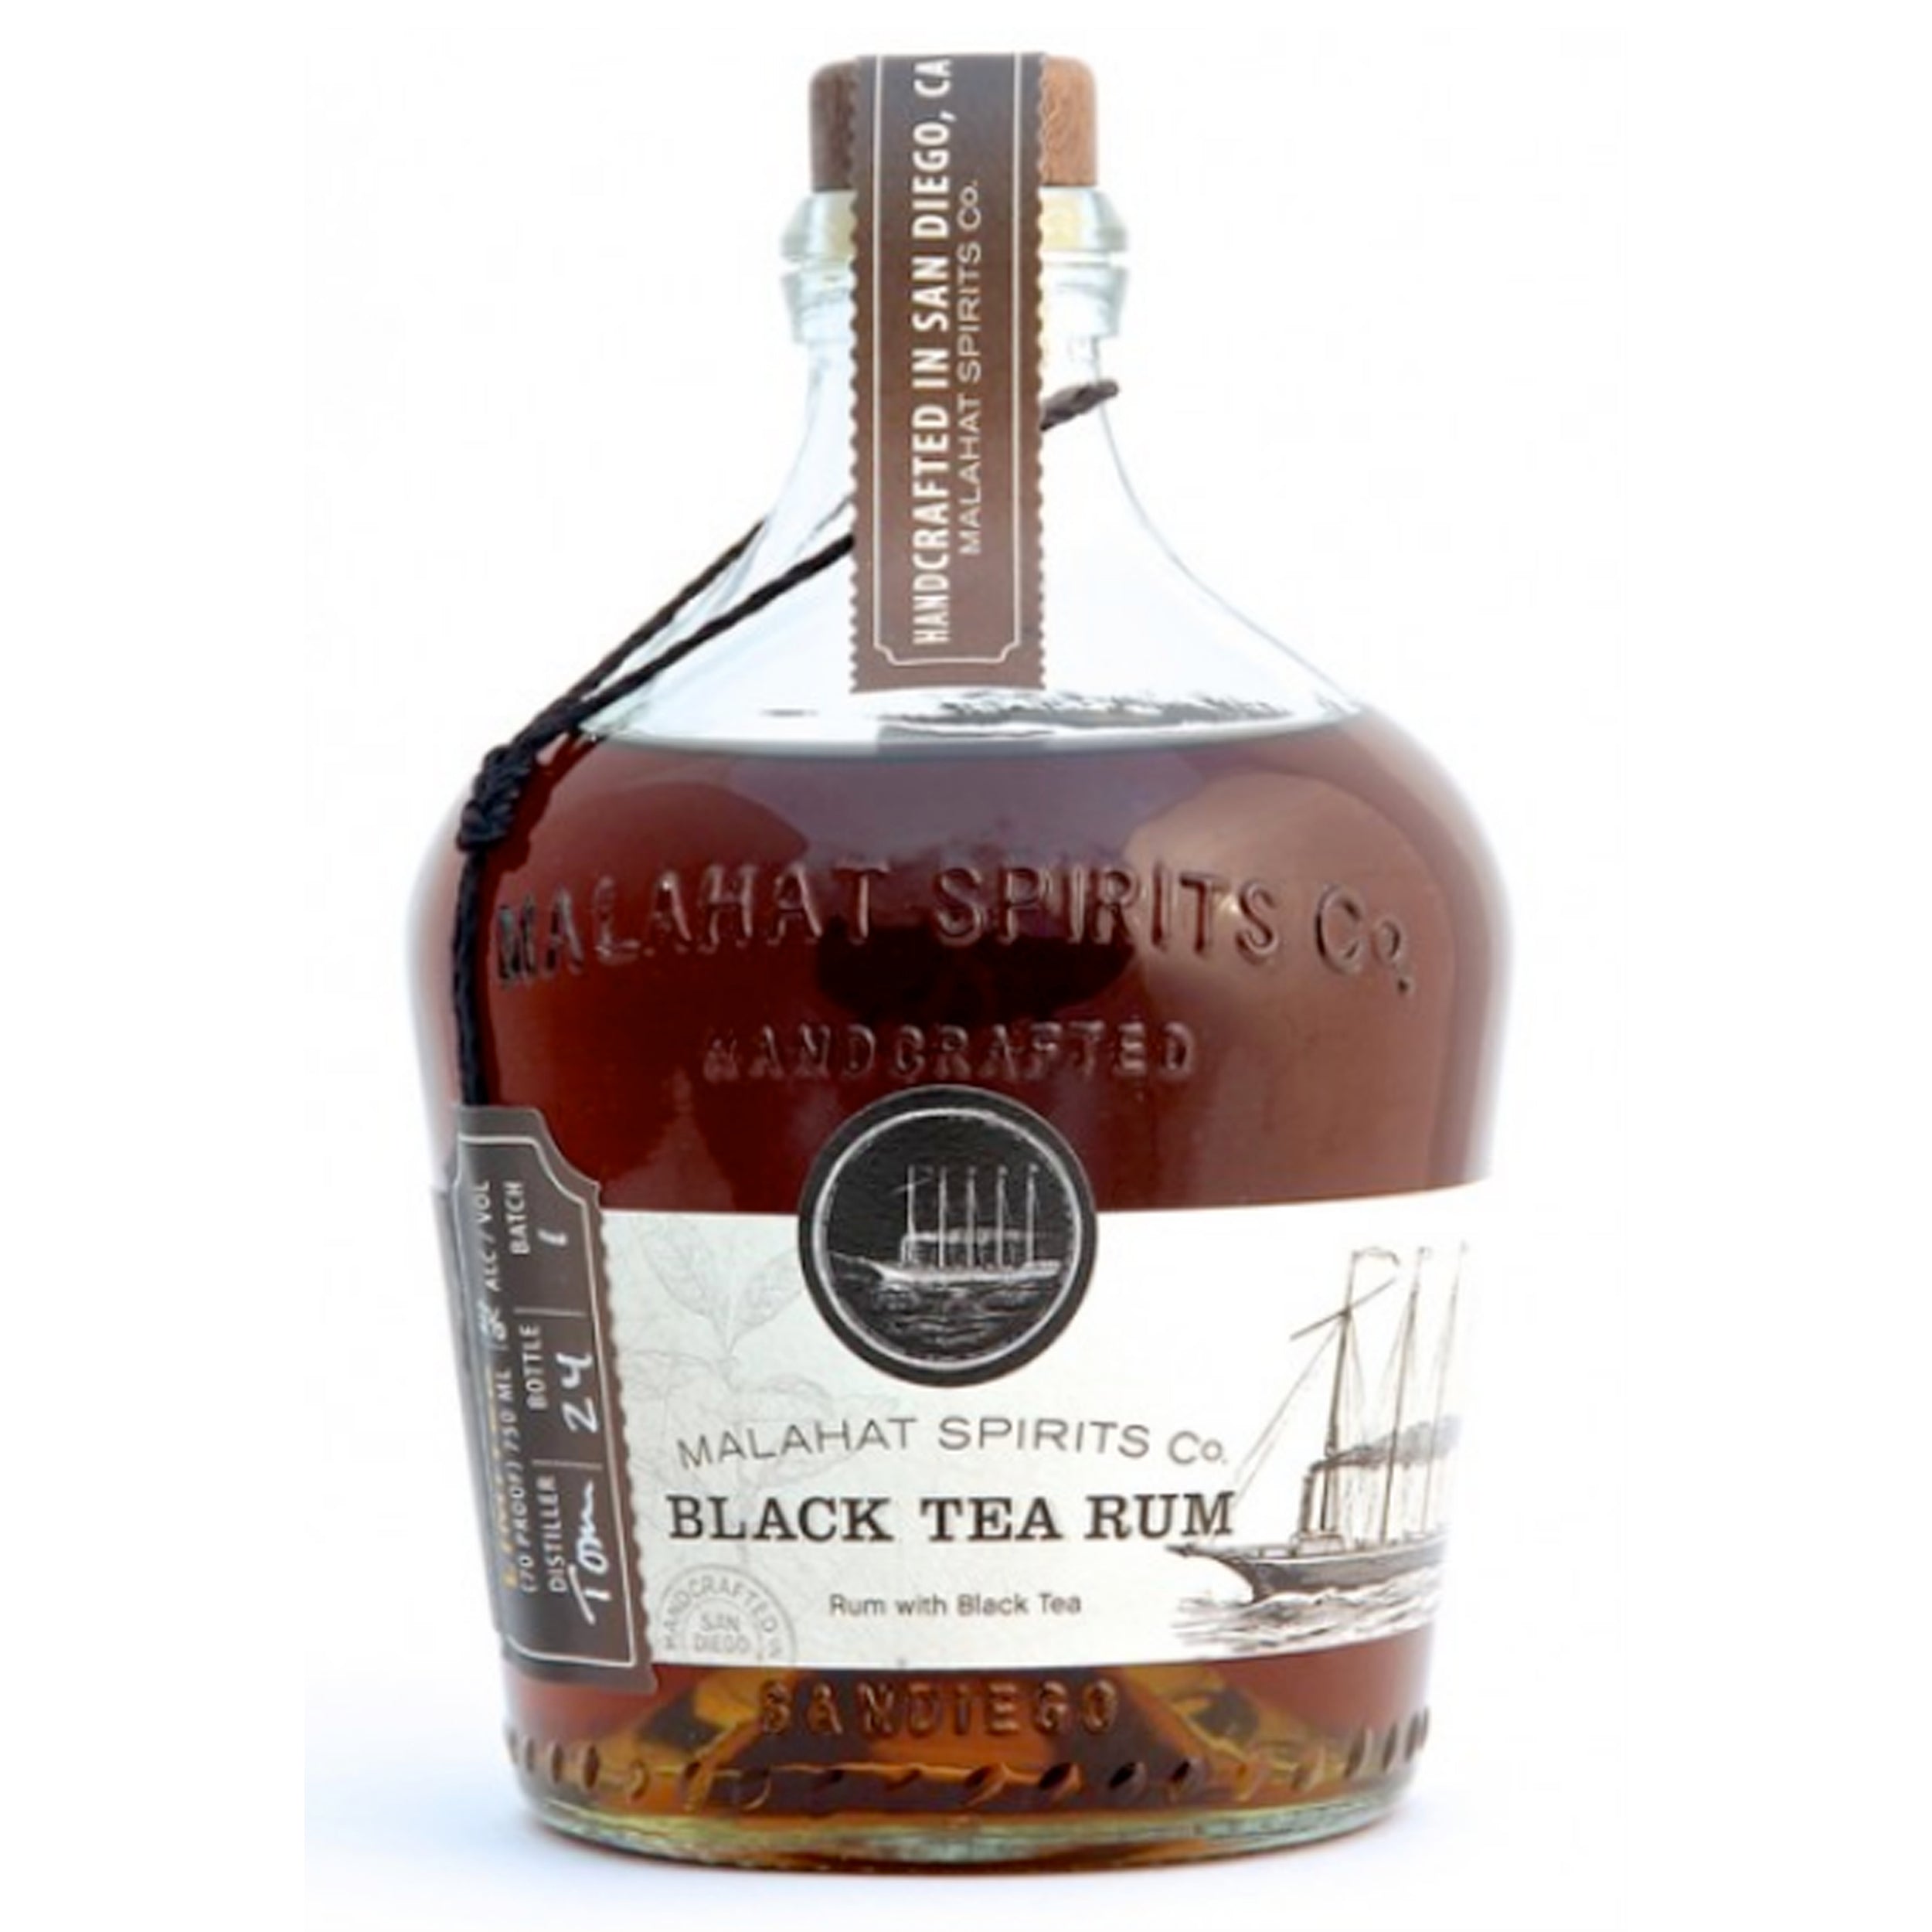 Malahat Spirits Black Tea Flavored Rum